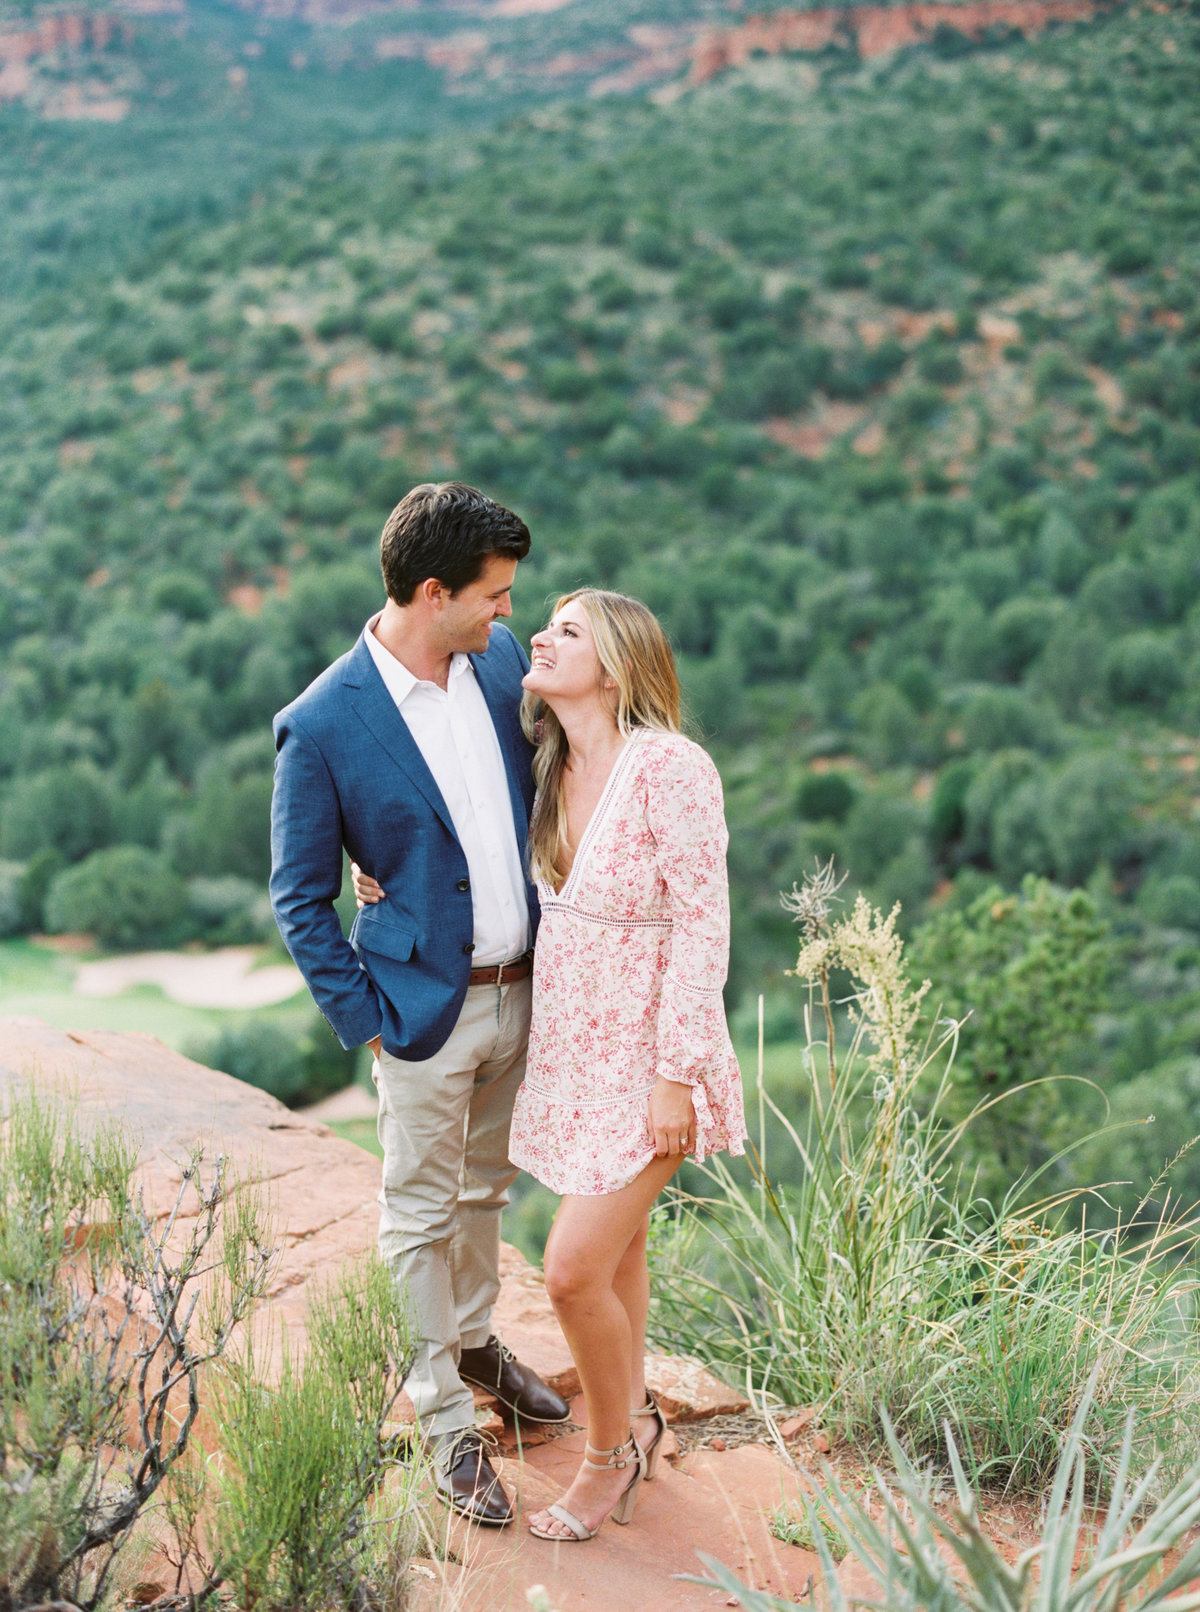 Kristen & Derek | Engagement Session | Sedona, Arizona | Mary Claire Photography | Arizona & Destination Fine Art Wedding Photographer